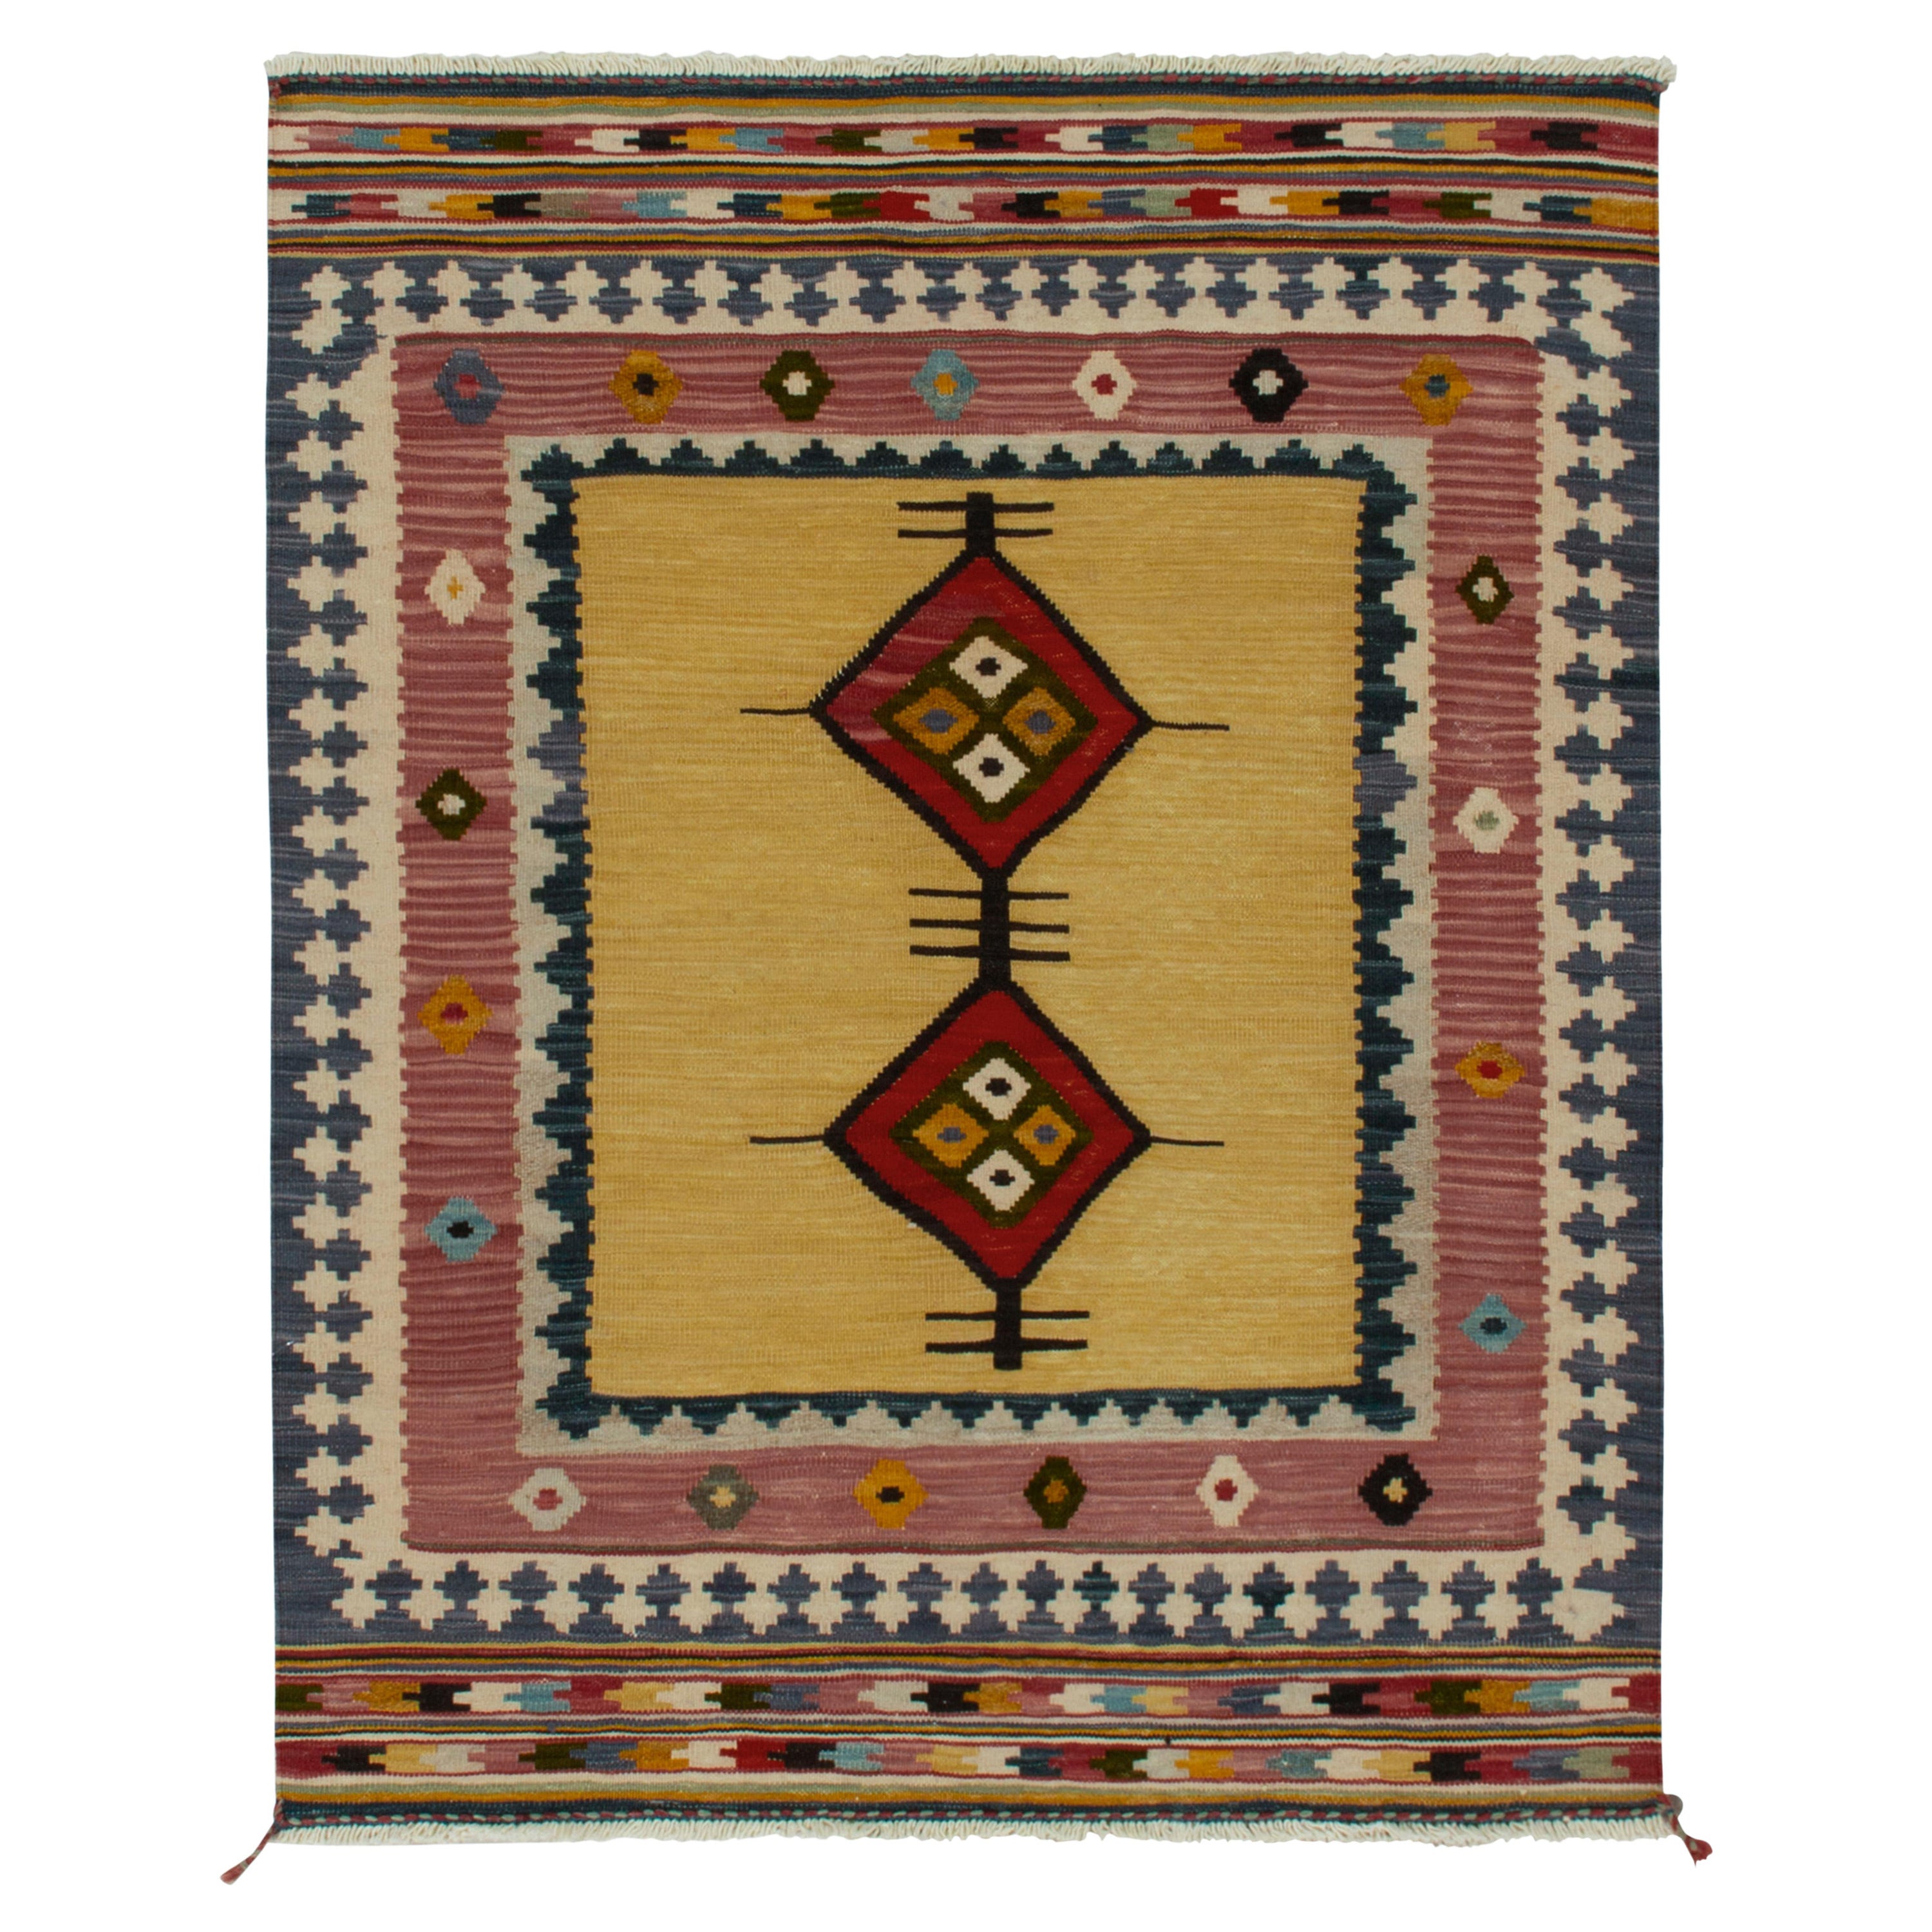 Vintage Sofreh Kilim Rug in Camel, Red Medallions Tribal Borders by Rug & Kilim For Sale